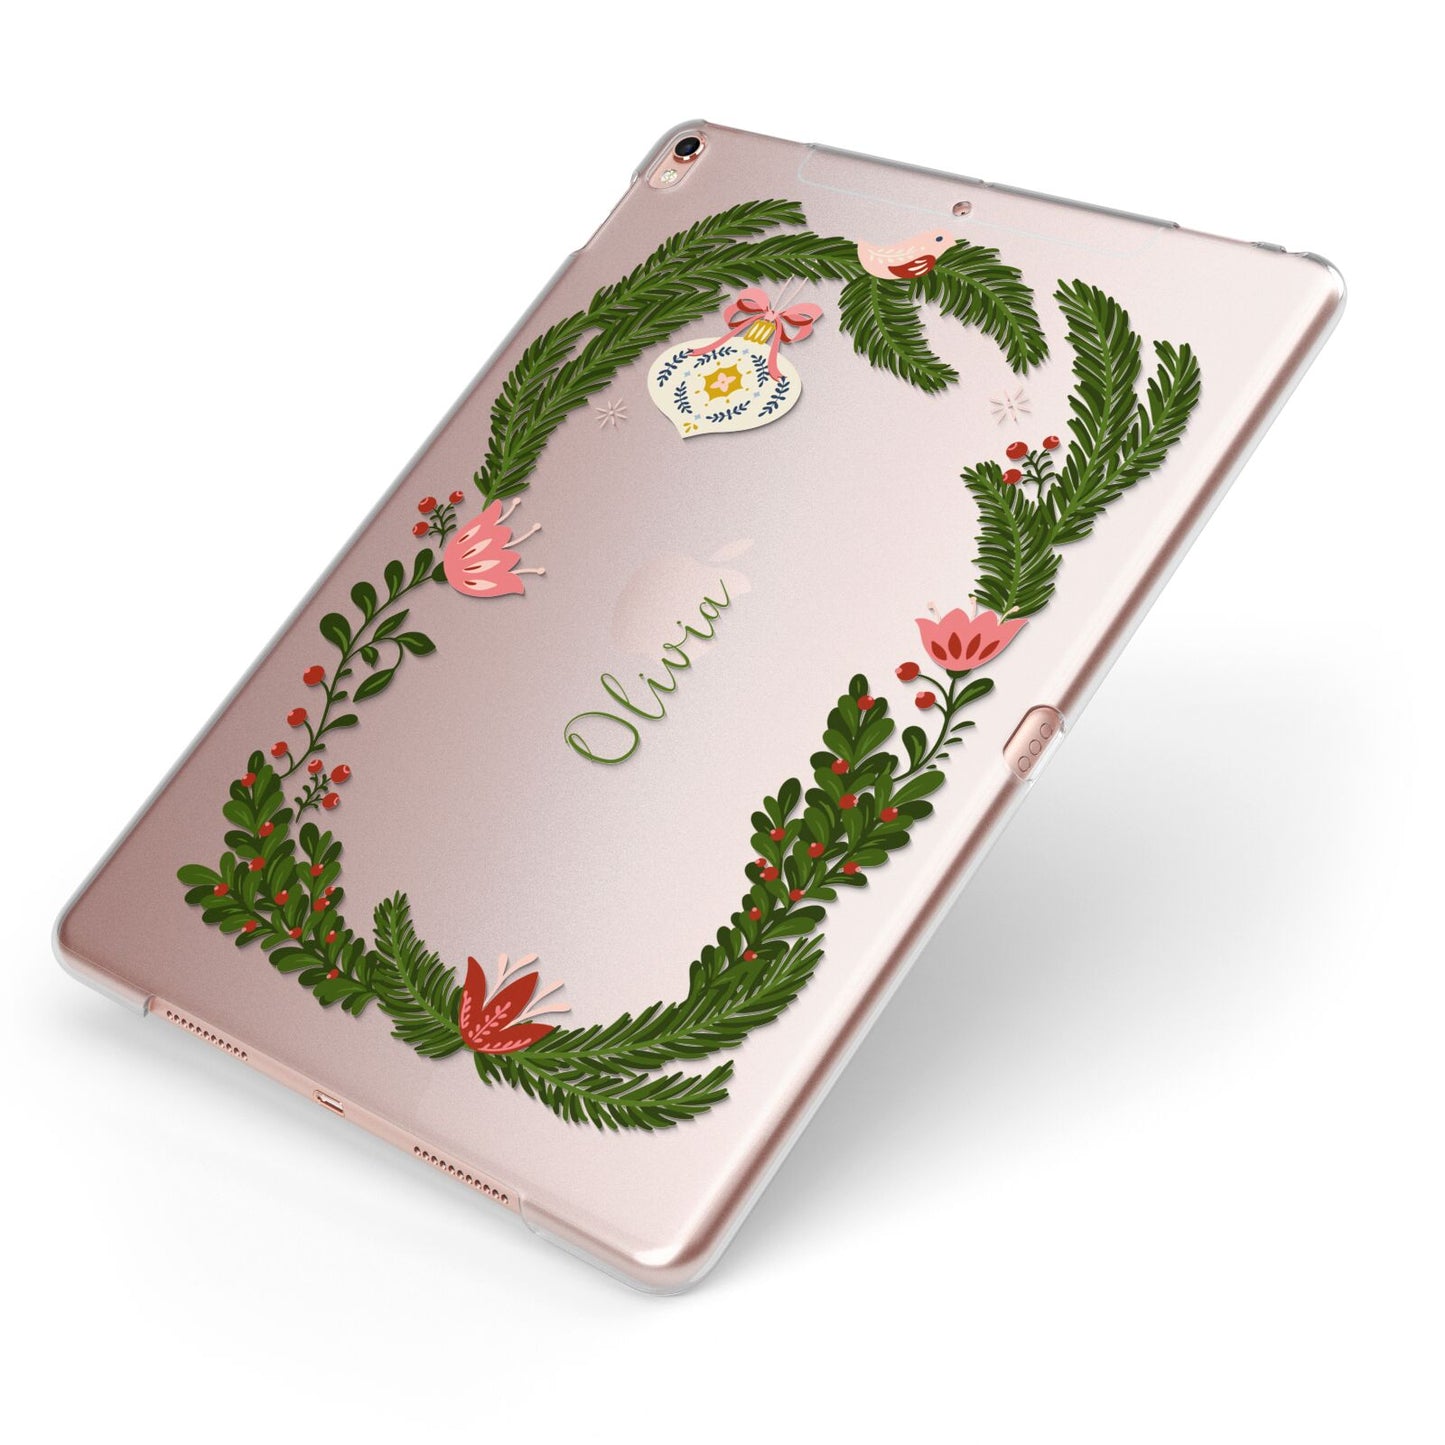 Personalised Vintage Foliage Christmas Apple iPad Case on Rose Gold iPad Side View